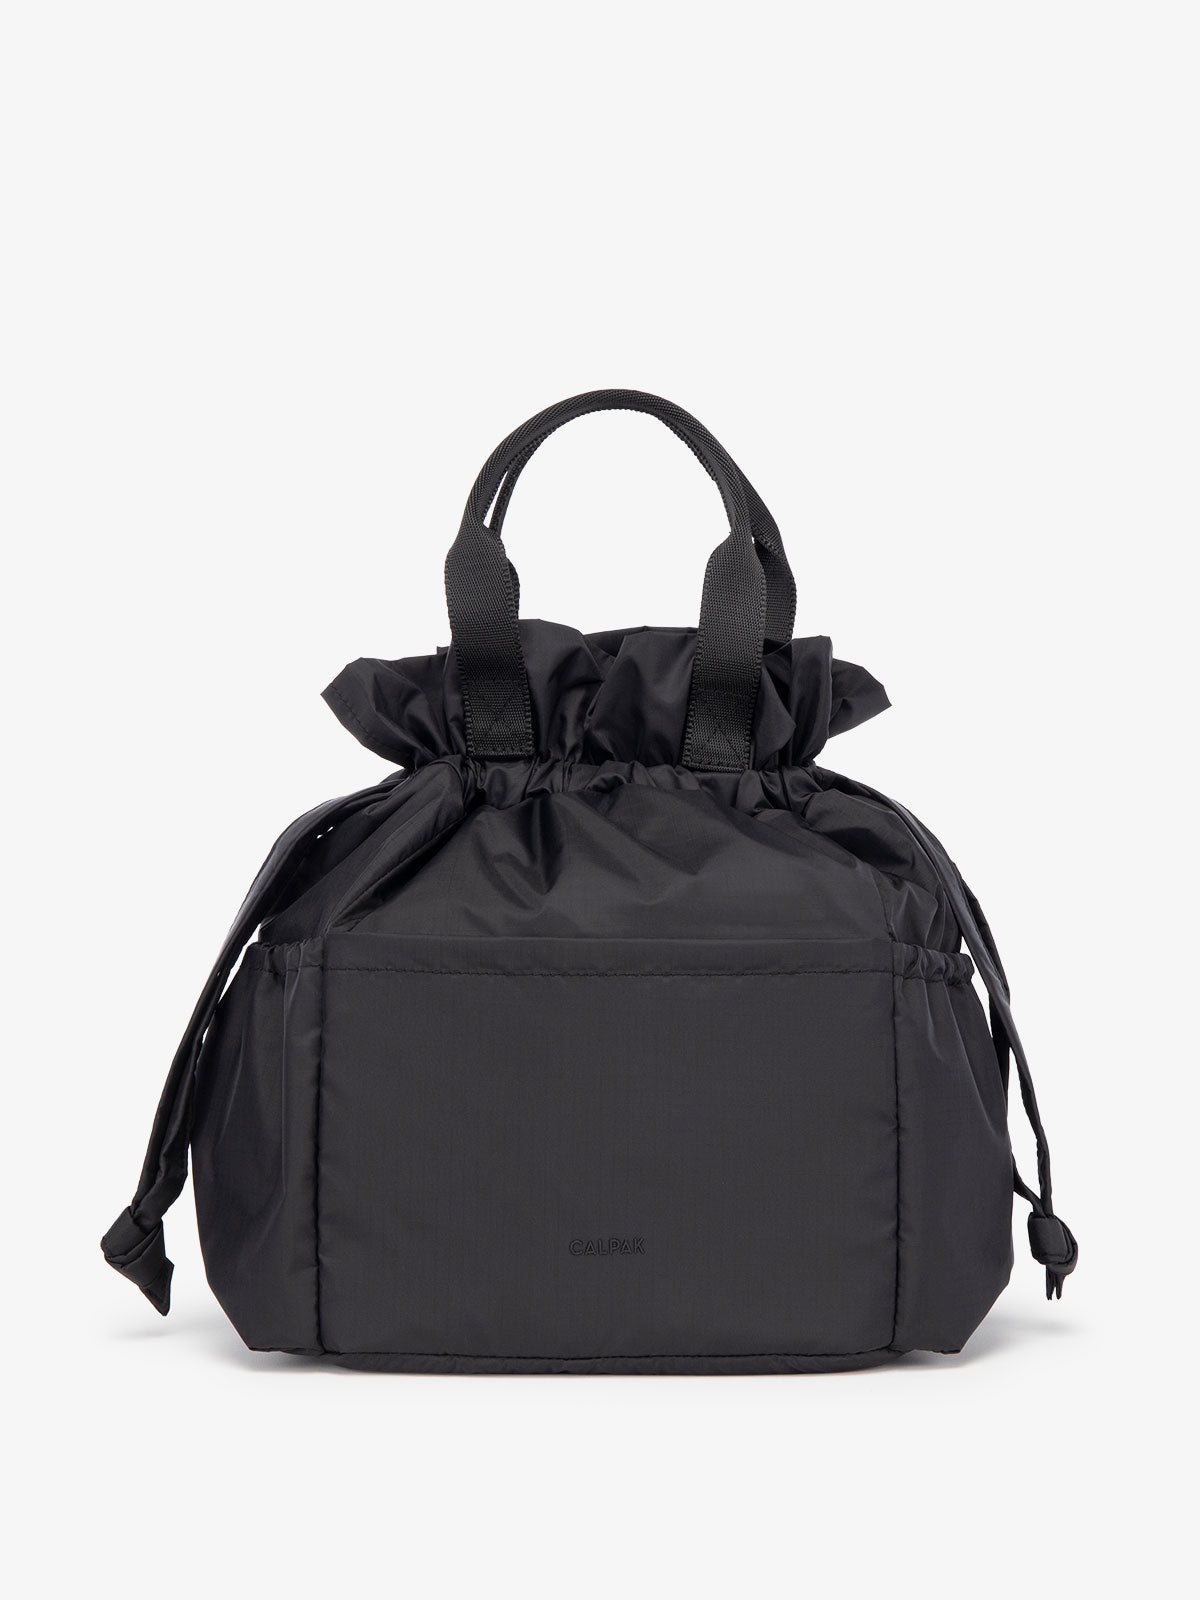 CALPAK black reusable lunch bag